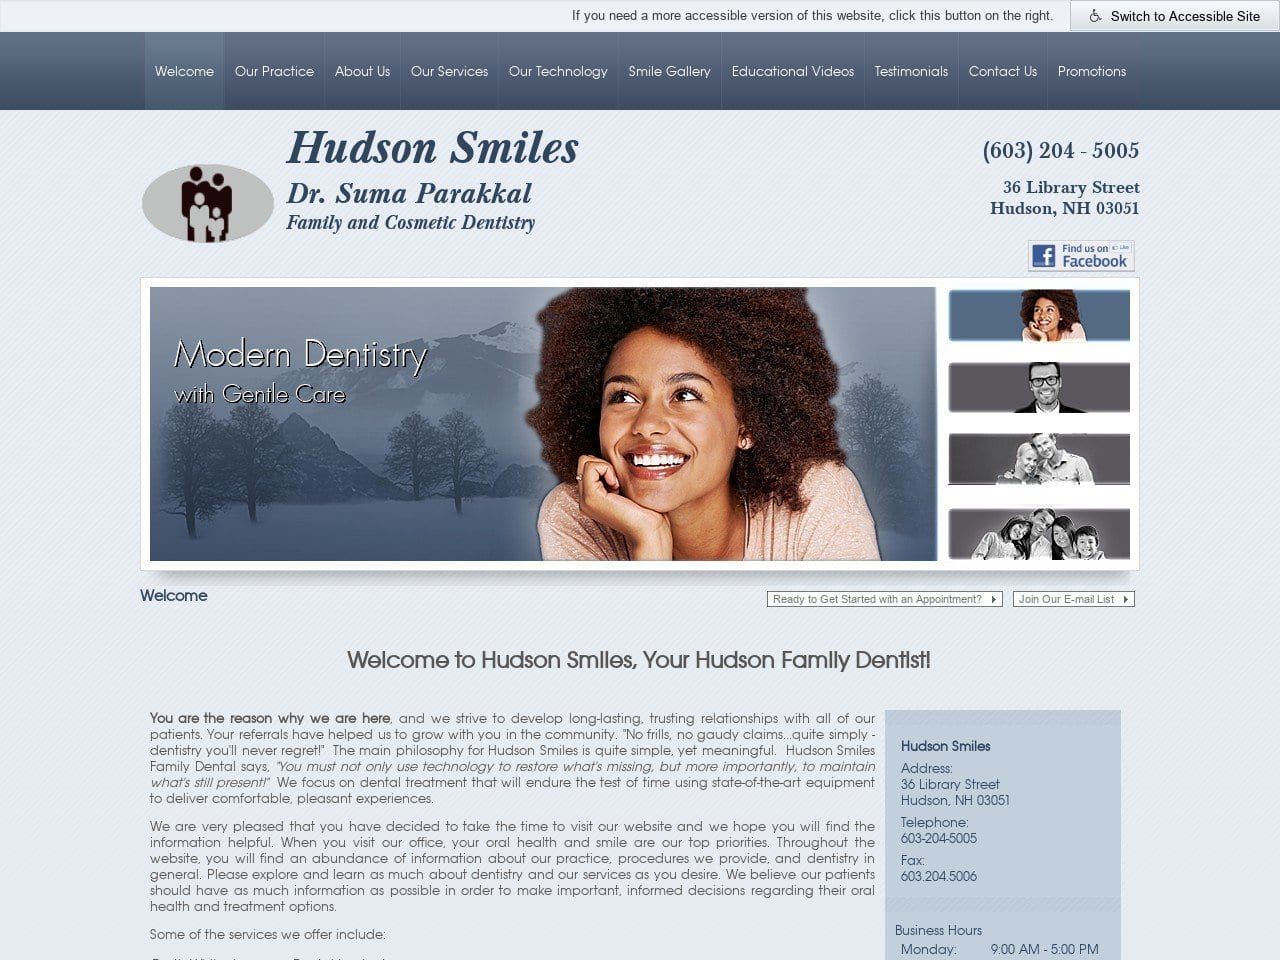 Hudson Smiles Website Screenshot from hudsonsmiles.com